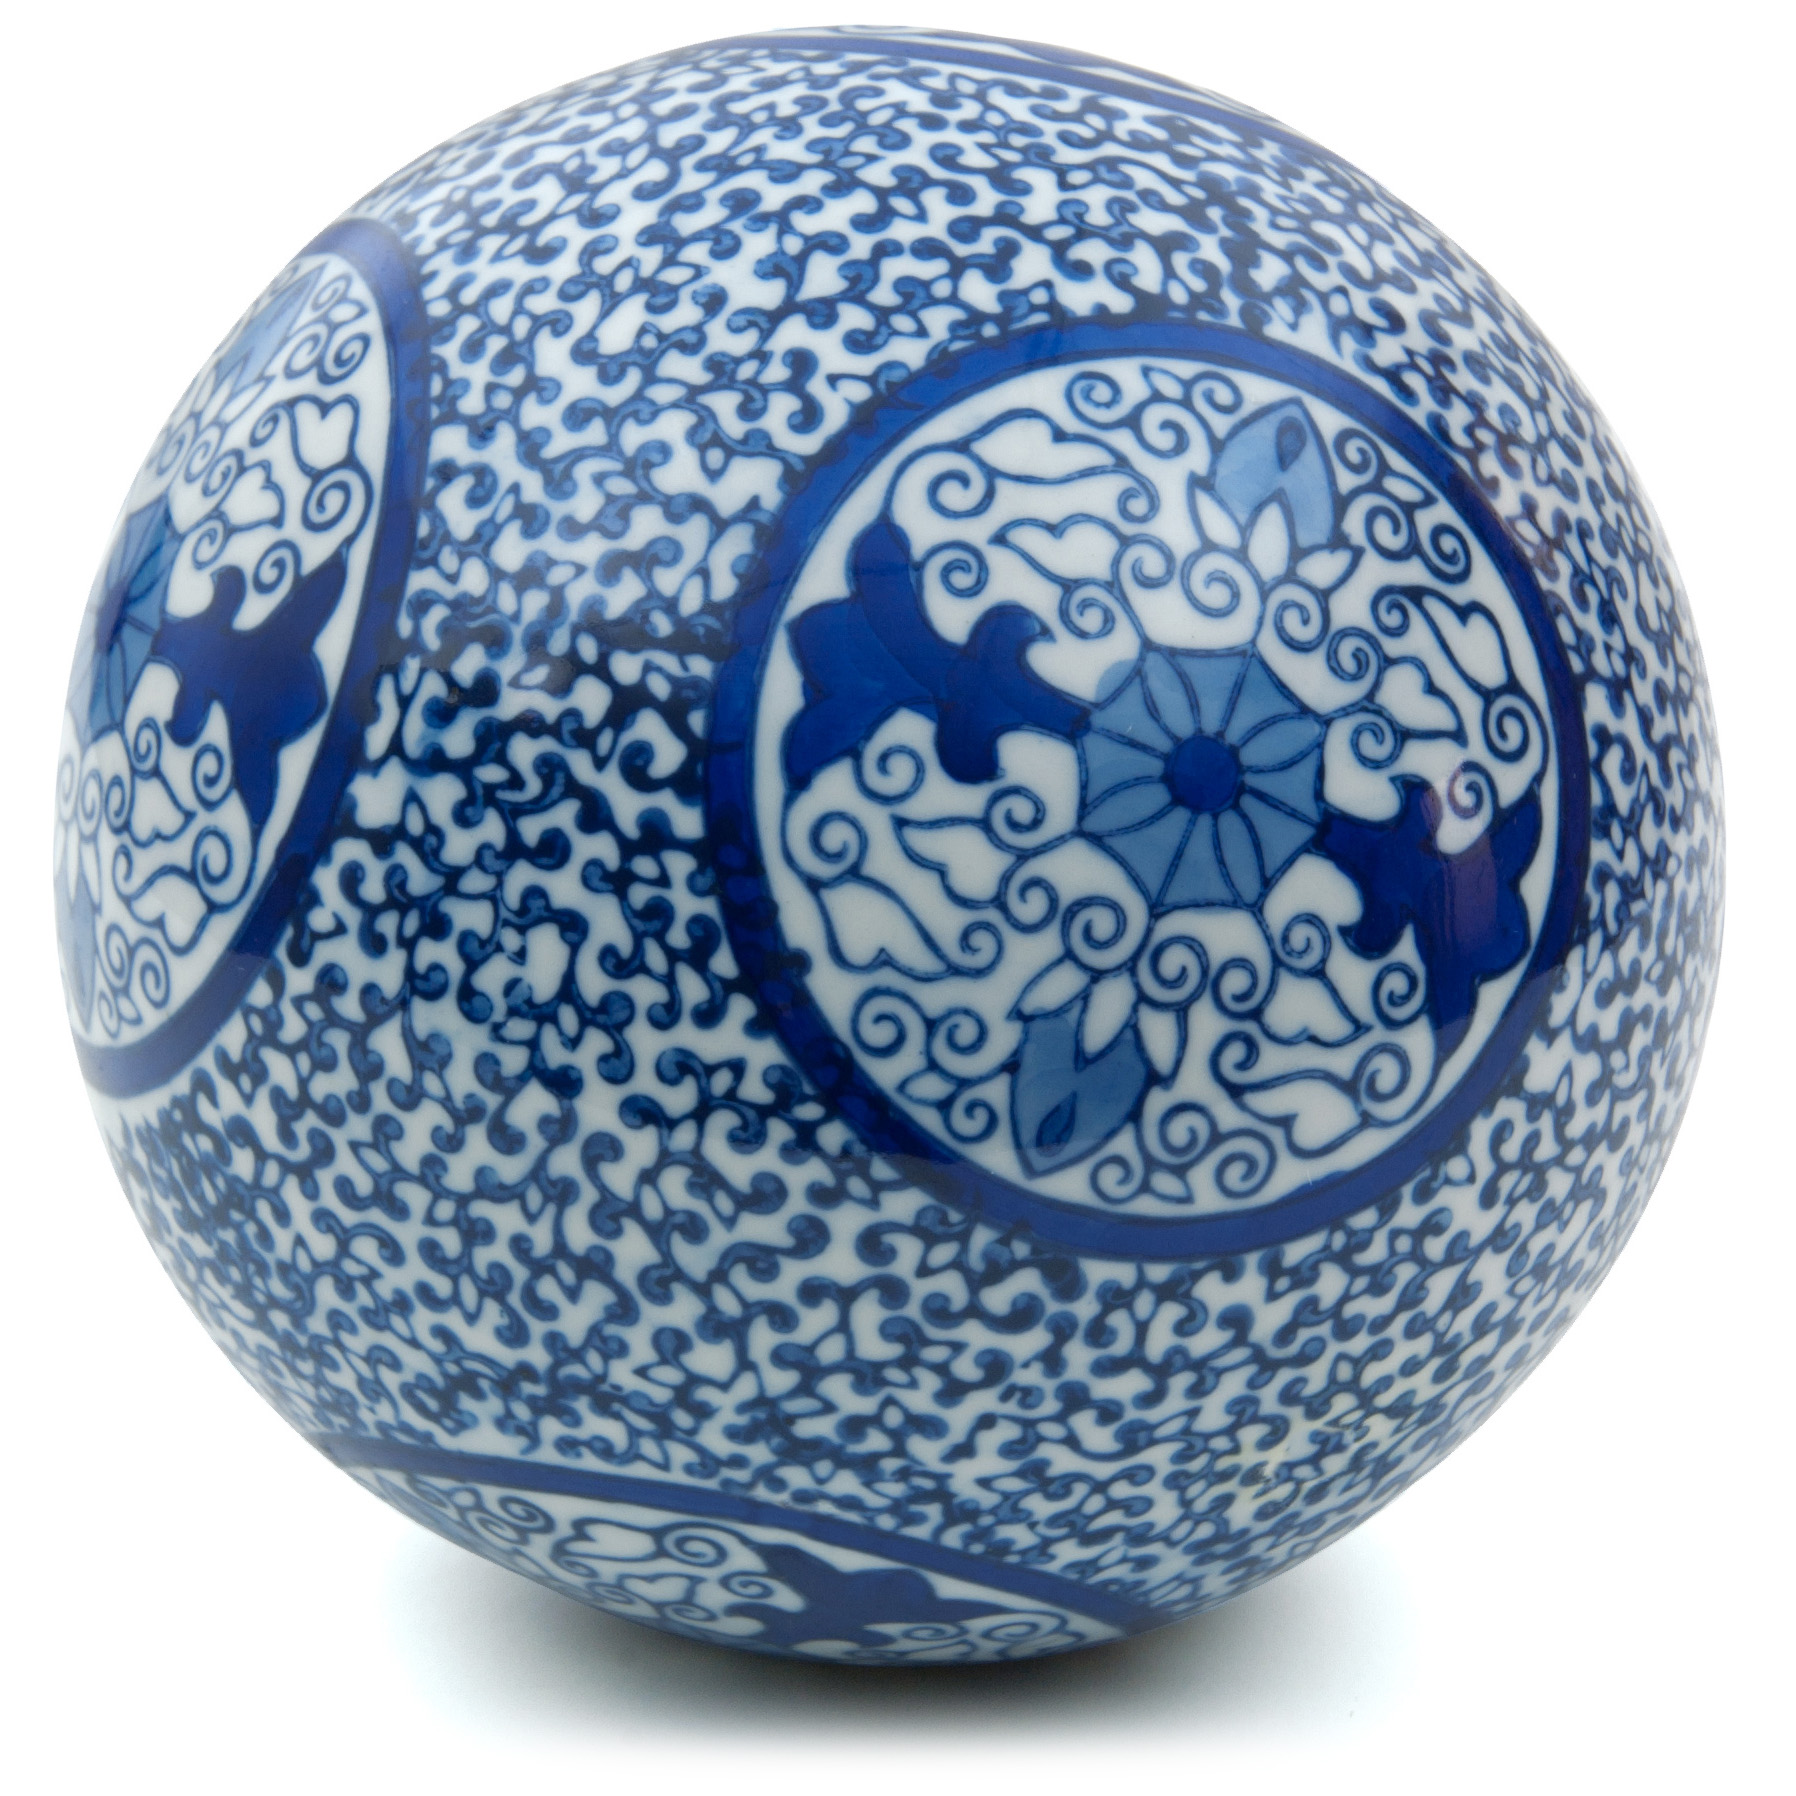 Oriental Furniture 6" Decorative Porcelain Ball - Blue Medallions